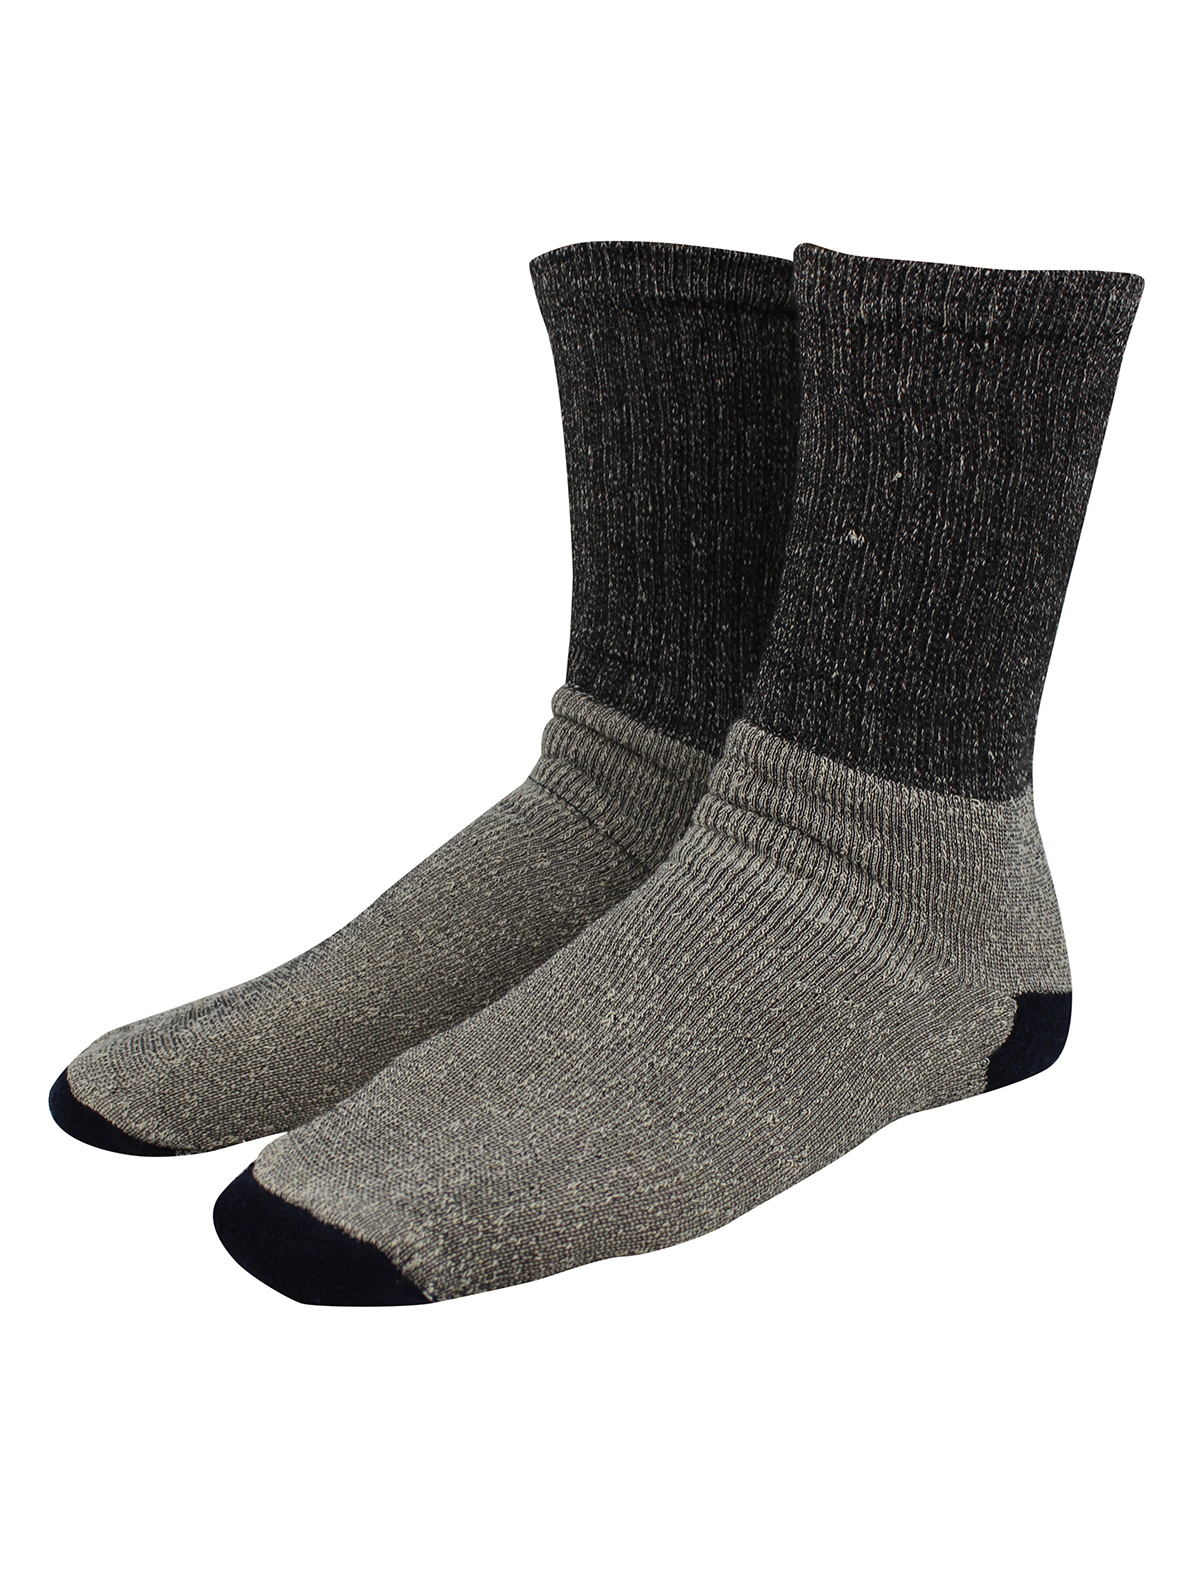 Mens 3-Pack Thermal Cotton Crew Socks - image 2 of 2